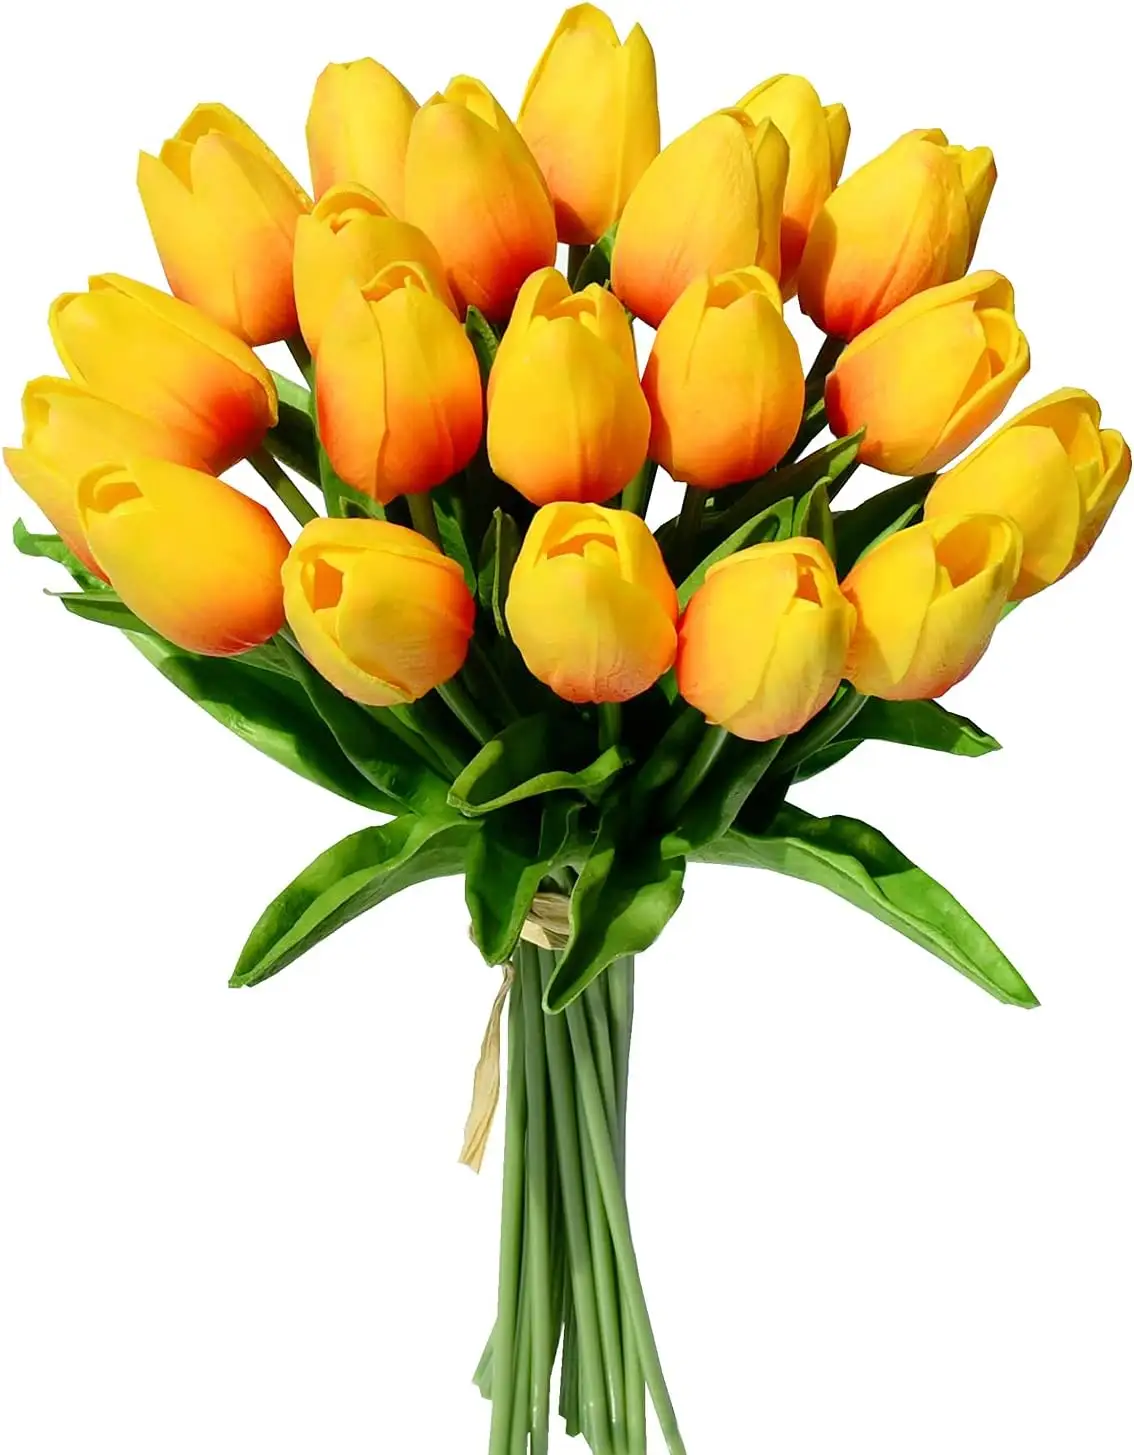 Centerpiece Artificial Flowers Wedding Wrist Corsage Flower Ball Home Decor Tulip Flowers